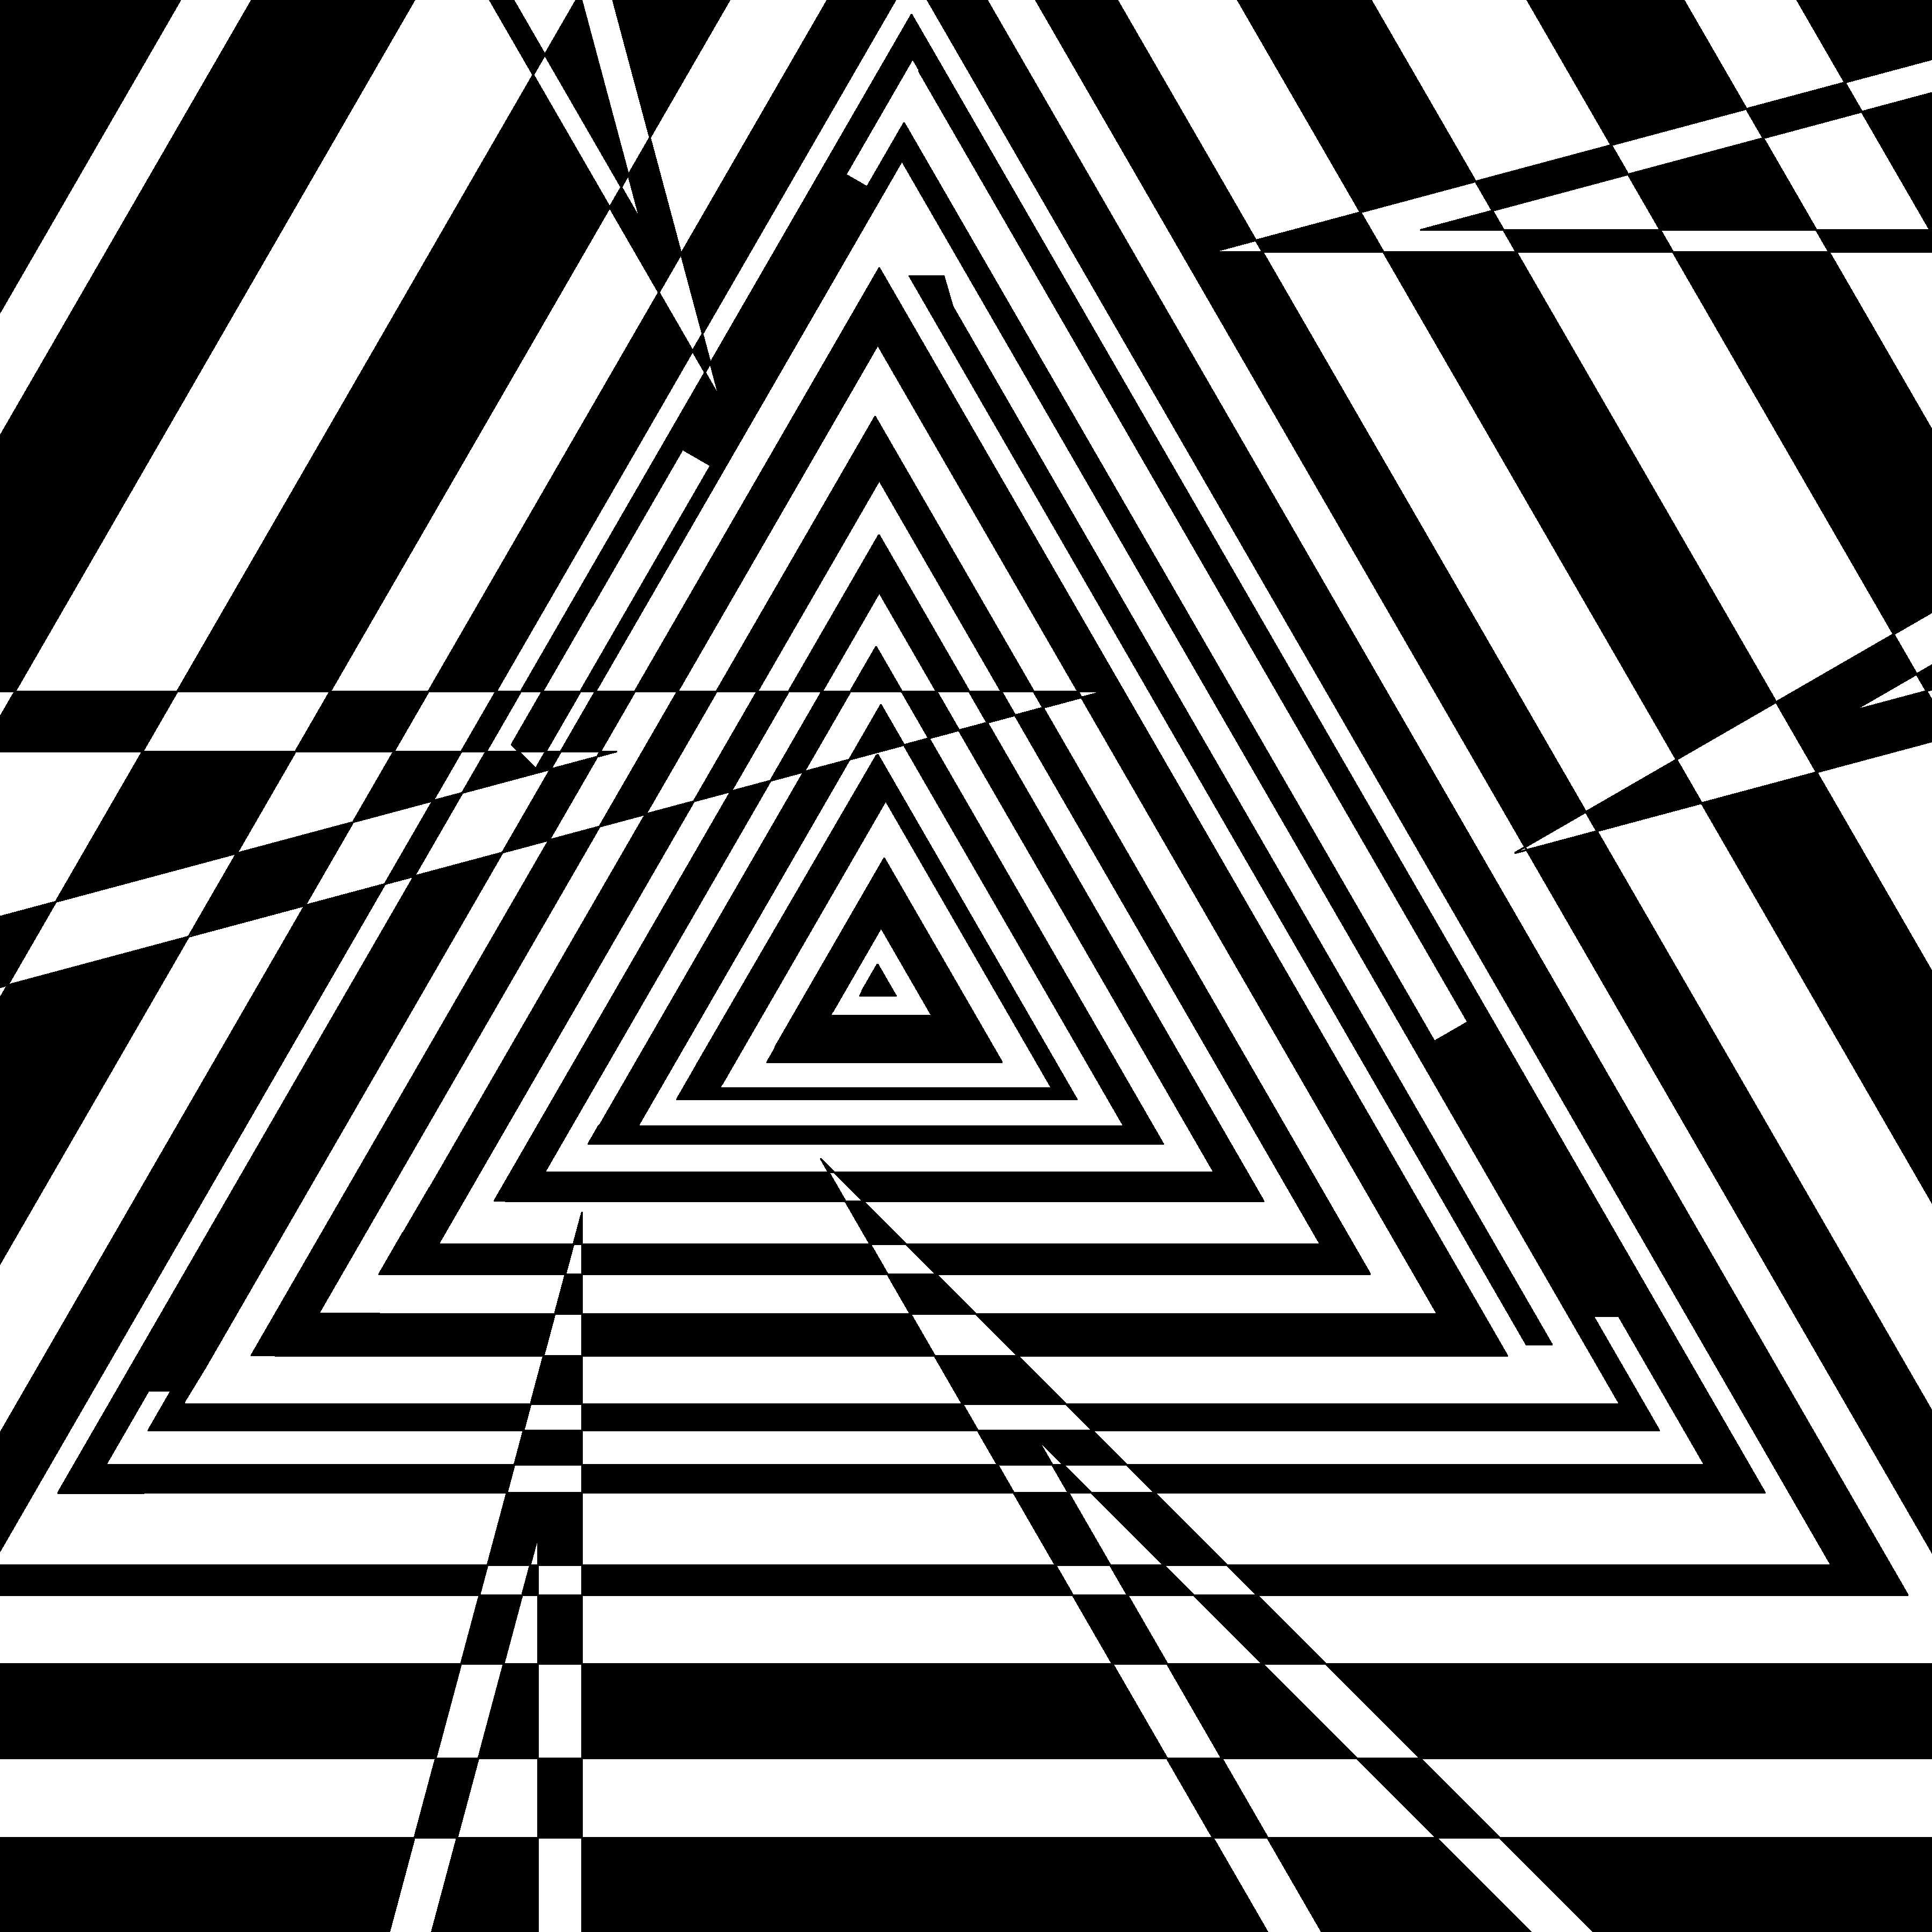 triangular-jagged-tunnel-casino-illusion